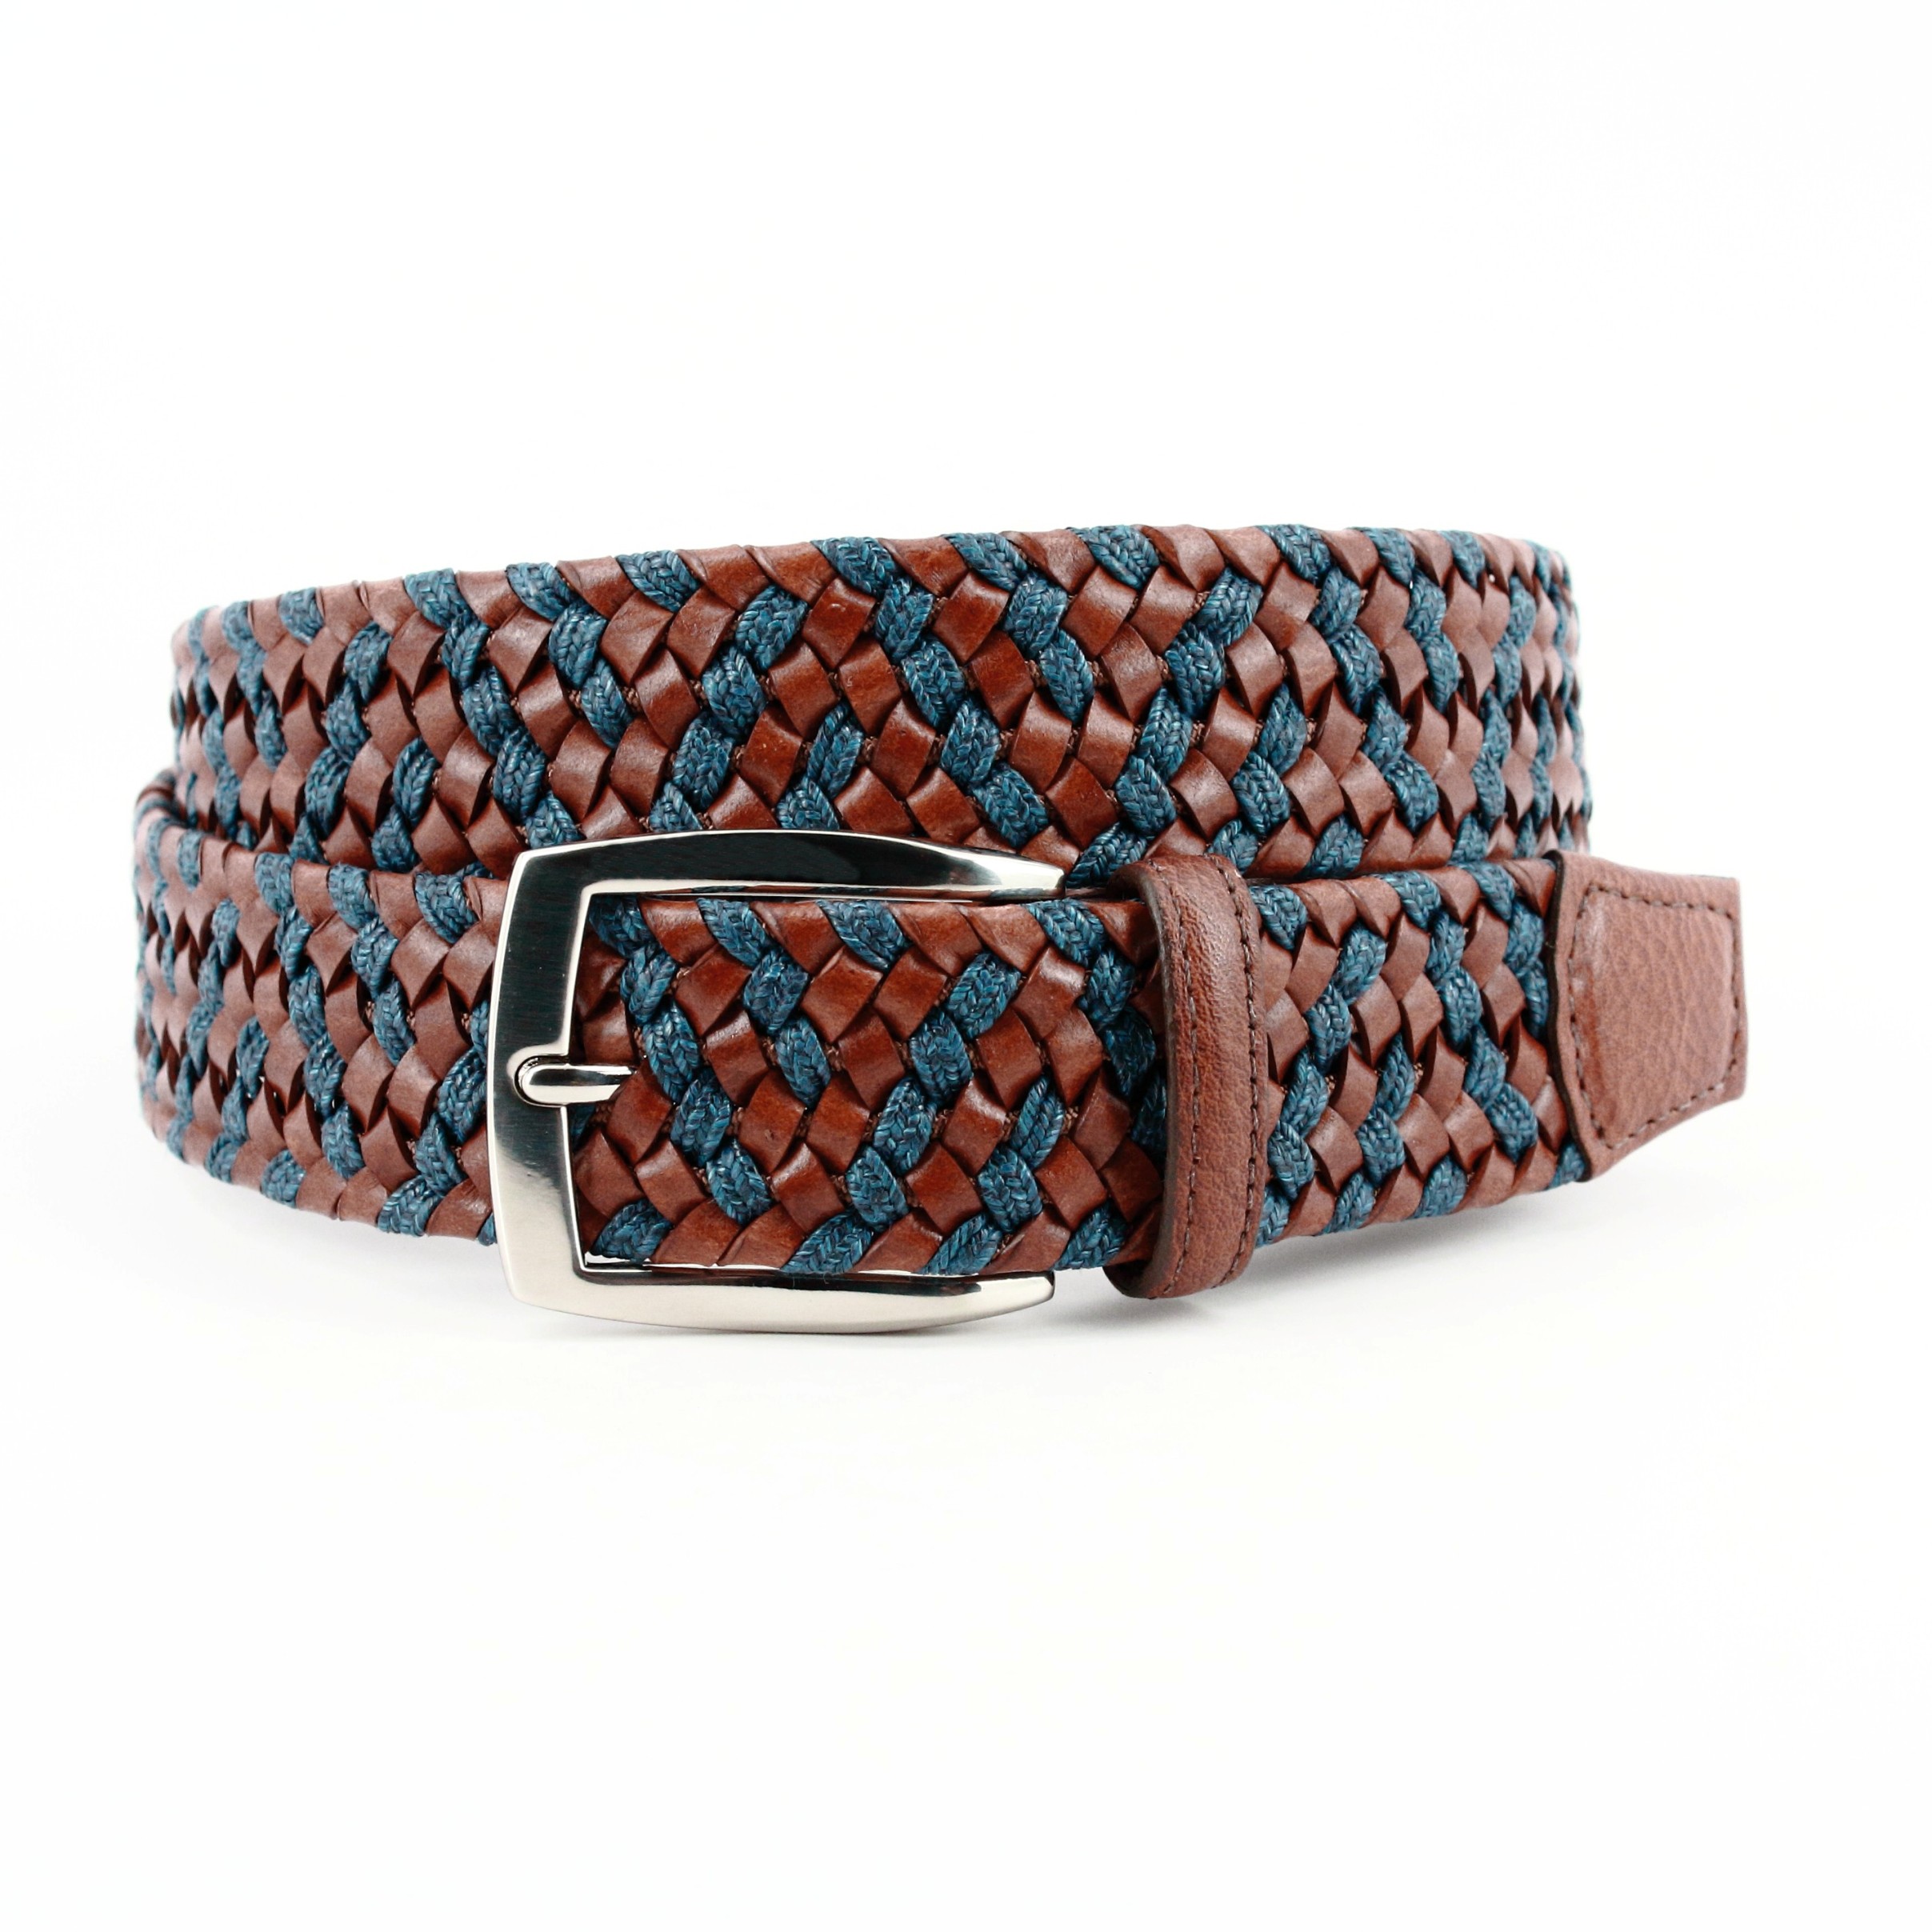 Torino Leather Company Italian Braided Belt